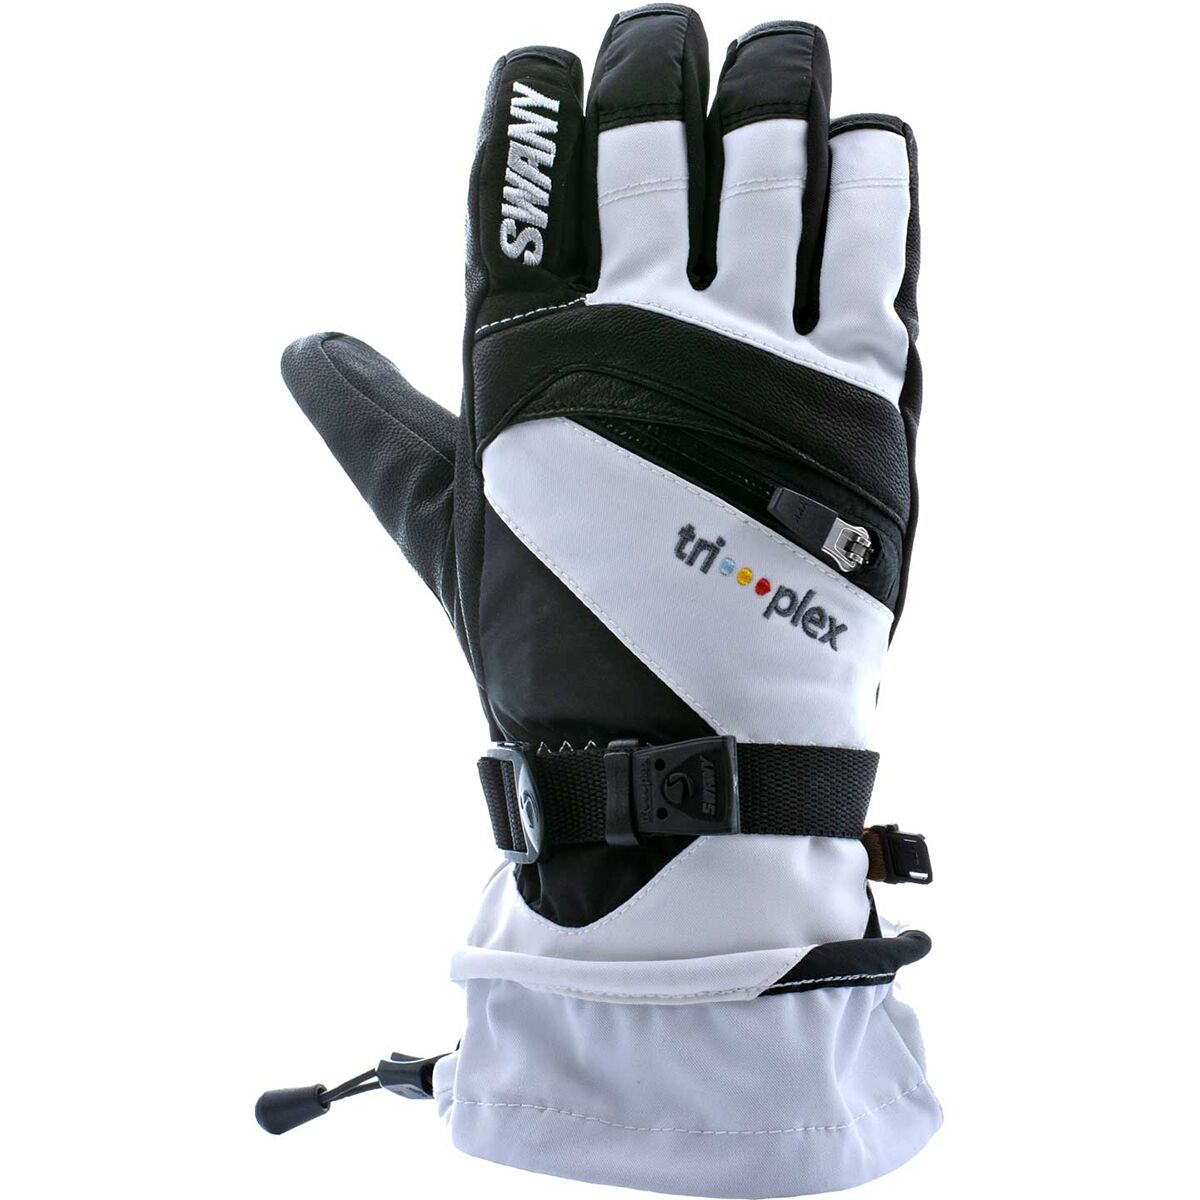 Swany X-Change Glove - Men's White/Black